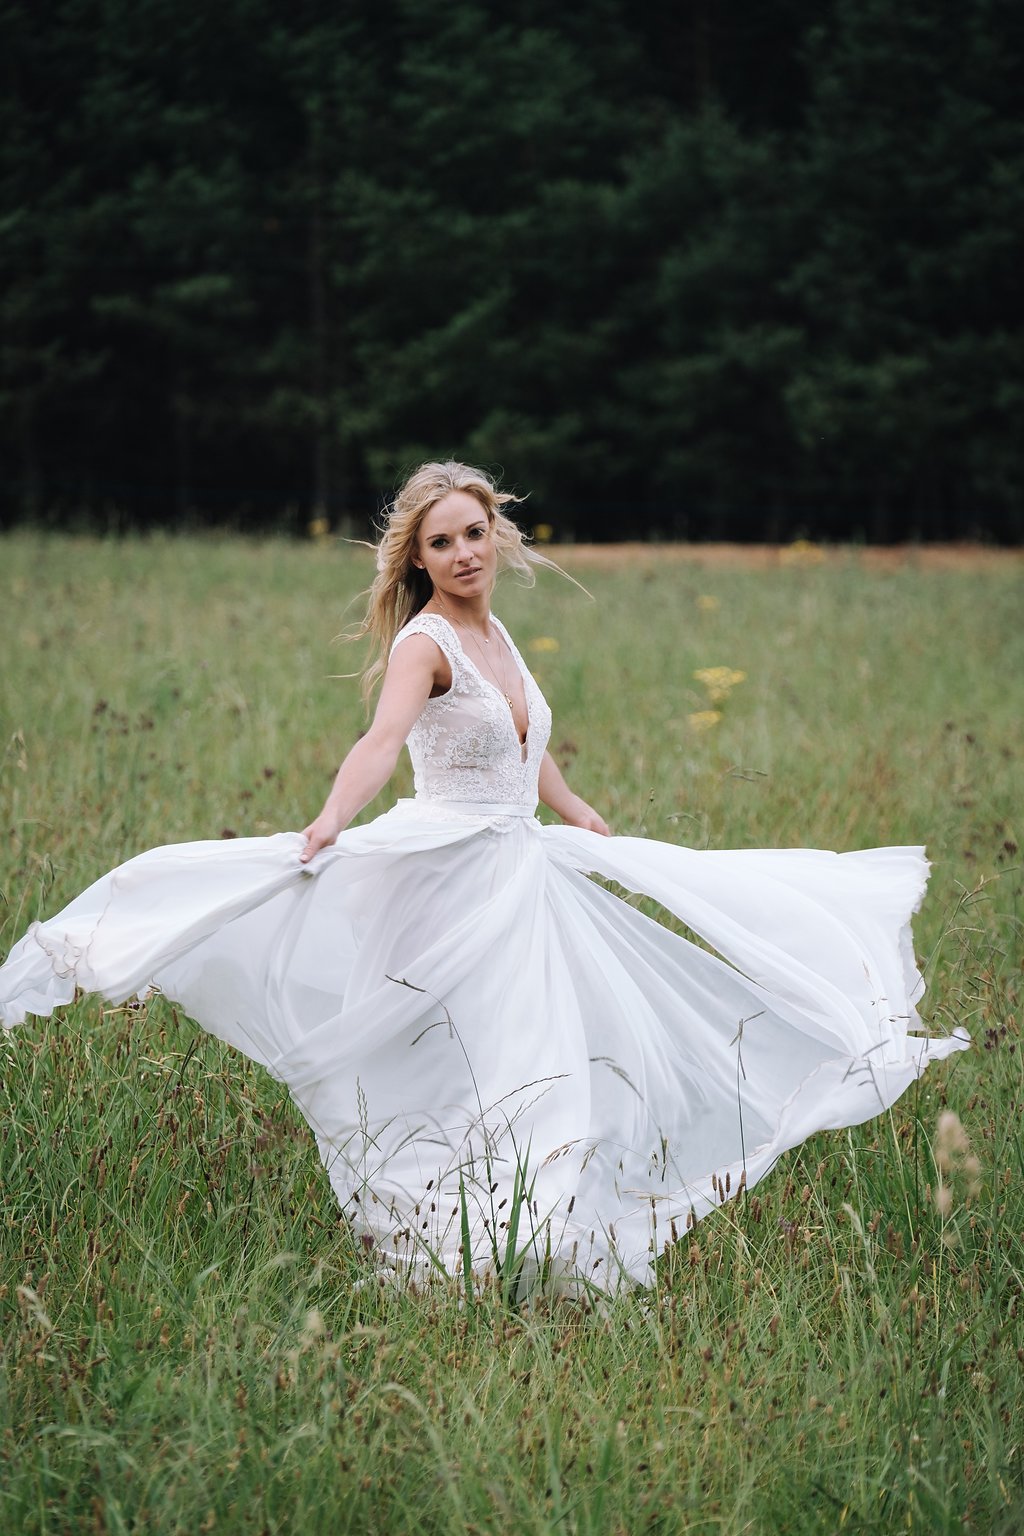 Gorgeous Wedding Photos - Farm-Forest Wedding - The Overwhelmed Bride Wedding Blog